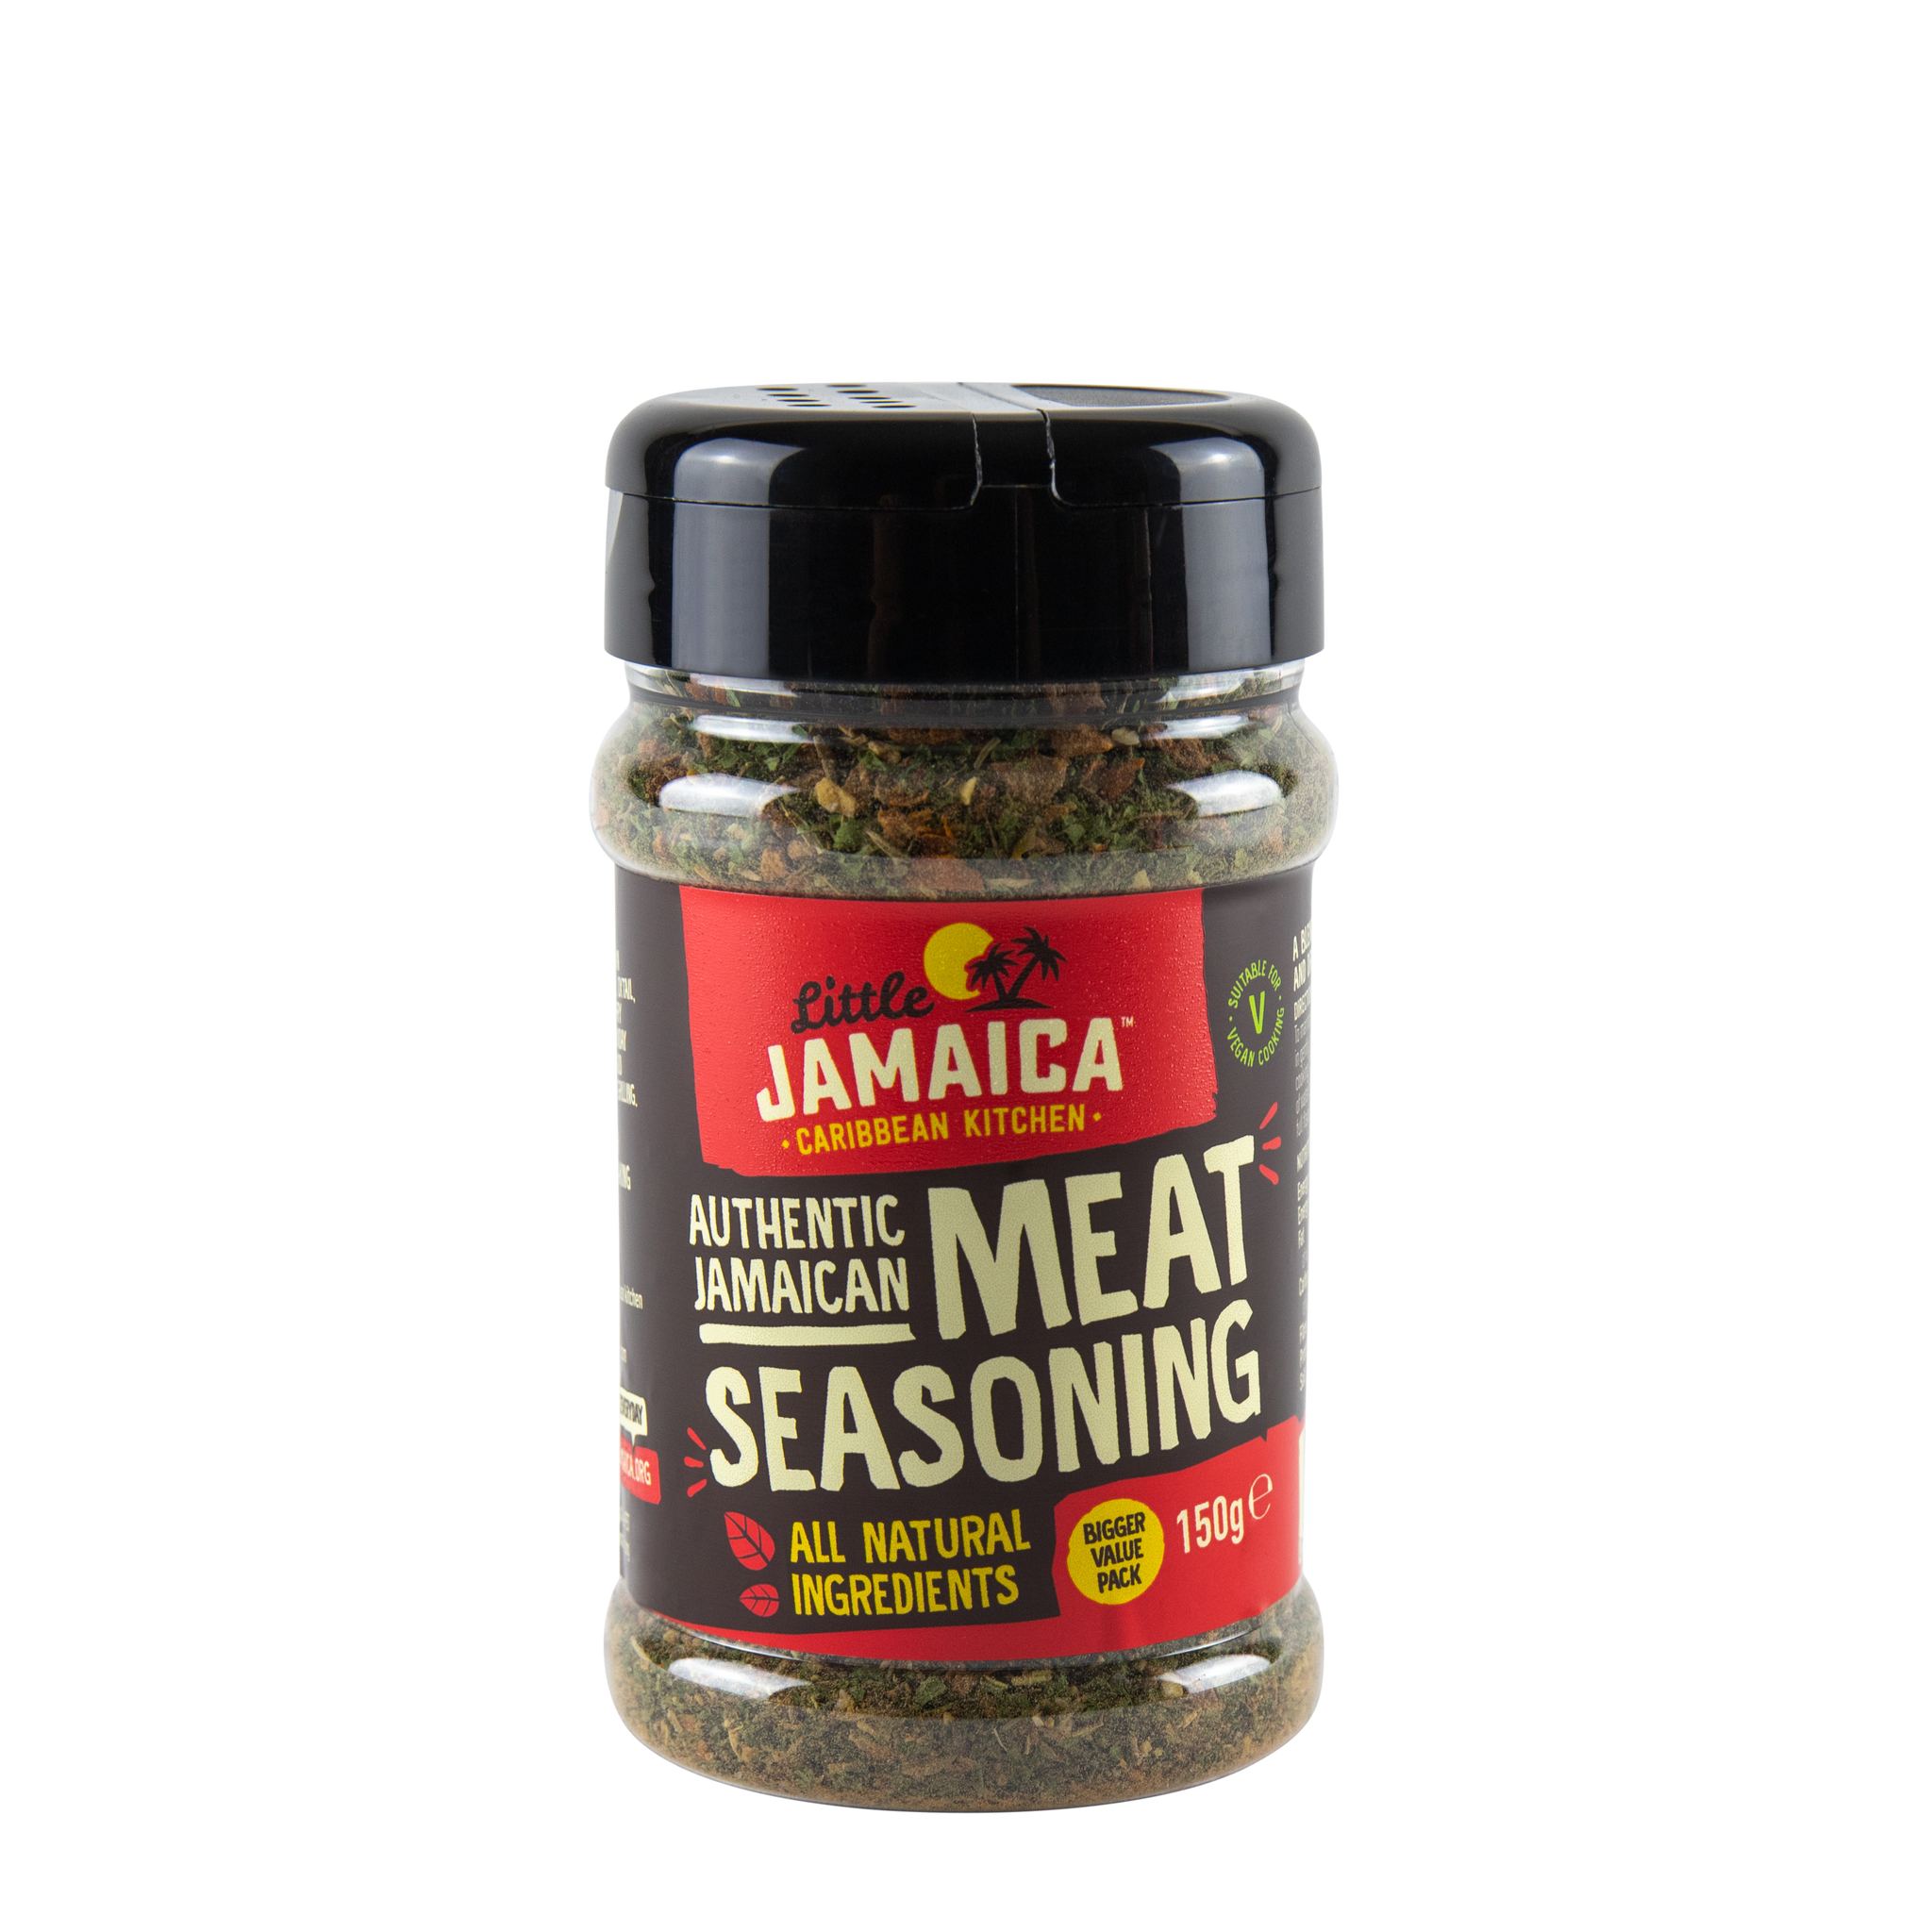 Authentic Jamaican Meat Seasoning